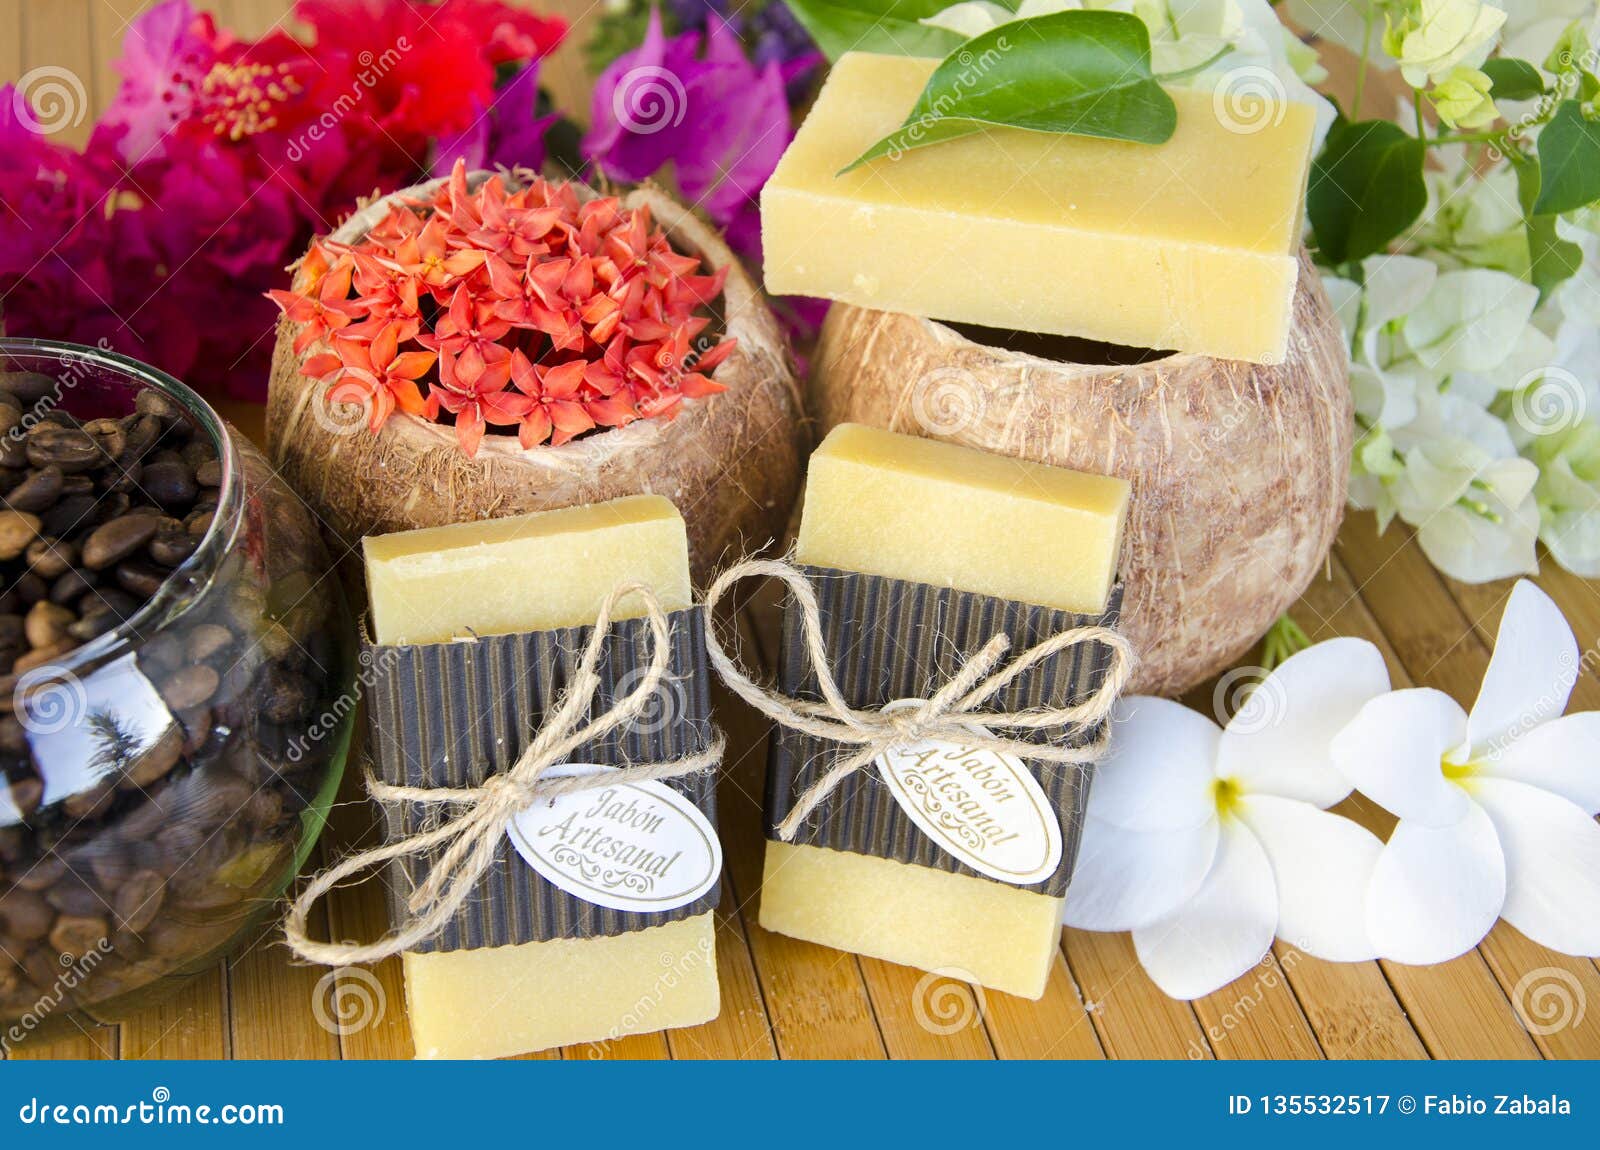 handcrafted soap coconut naturals